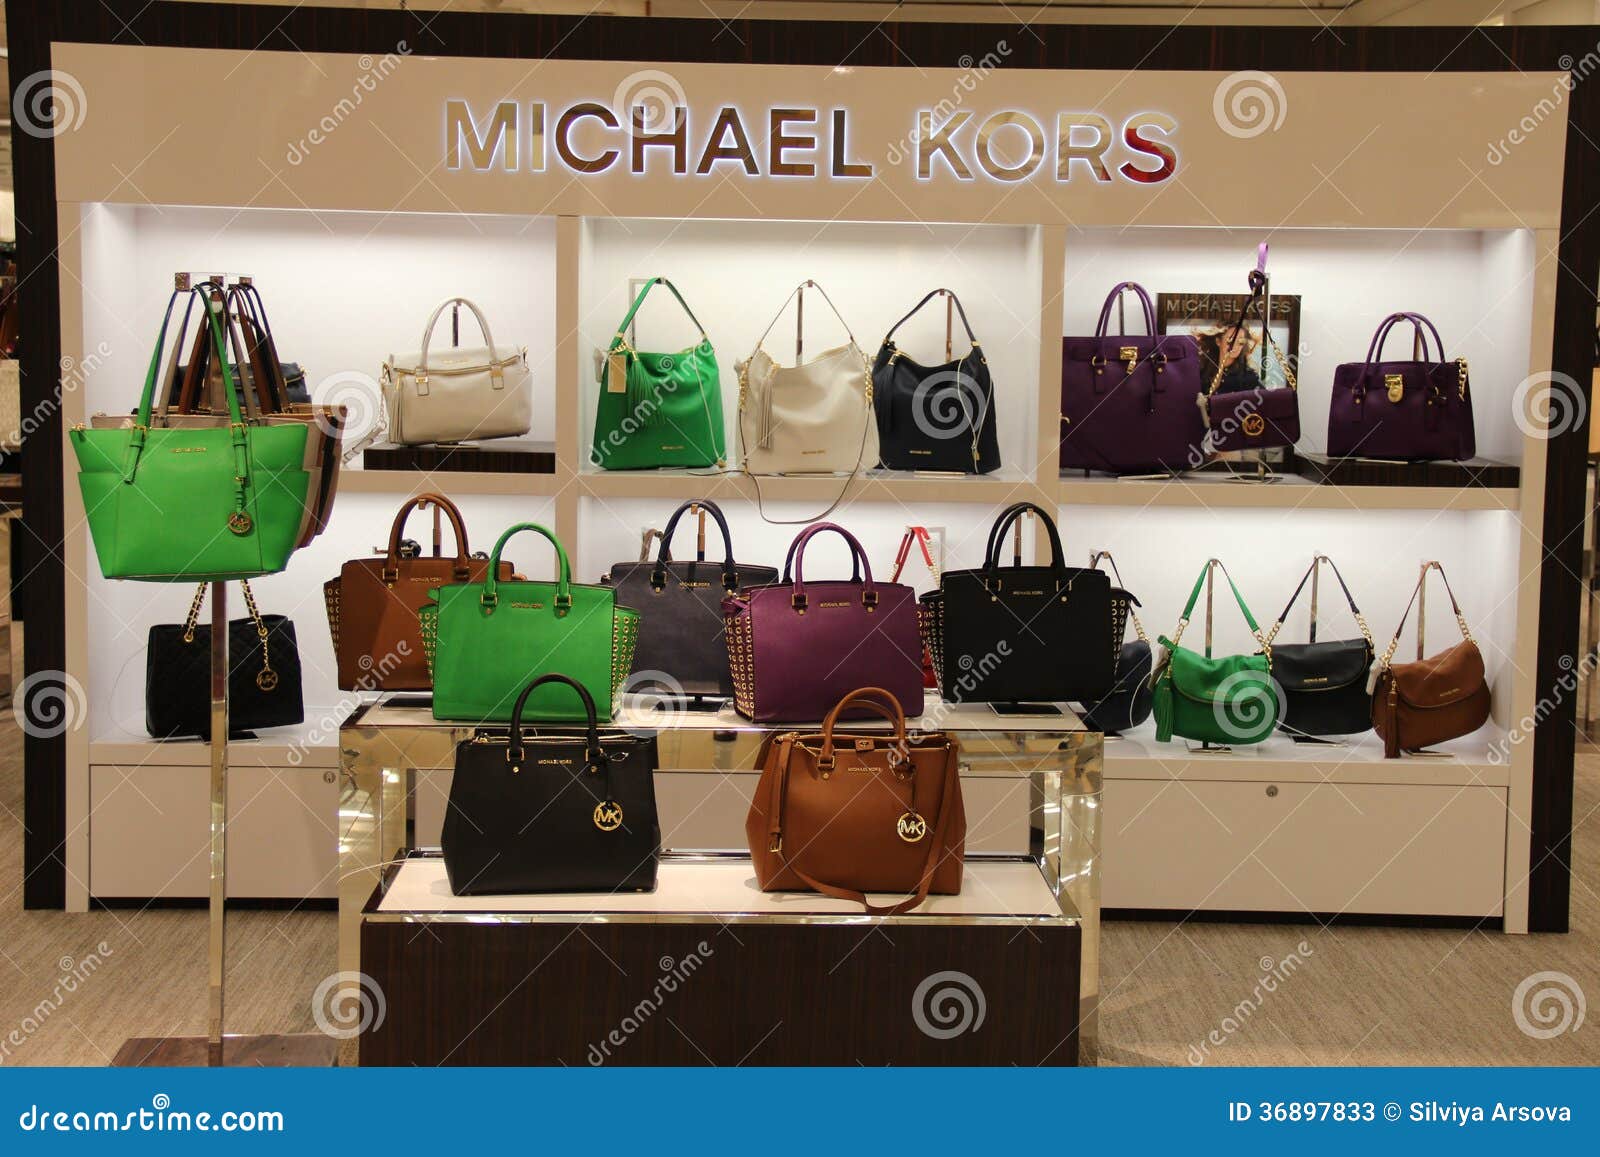 MK purses outlet store